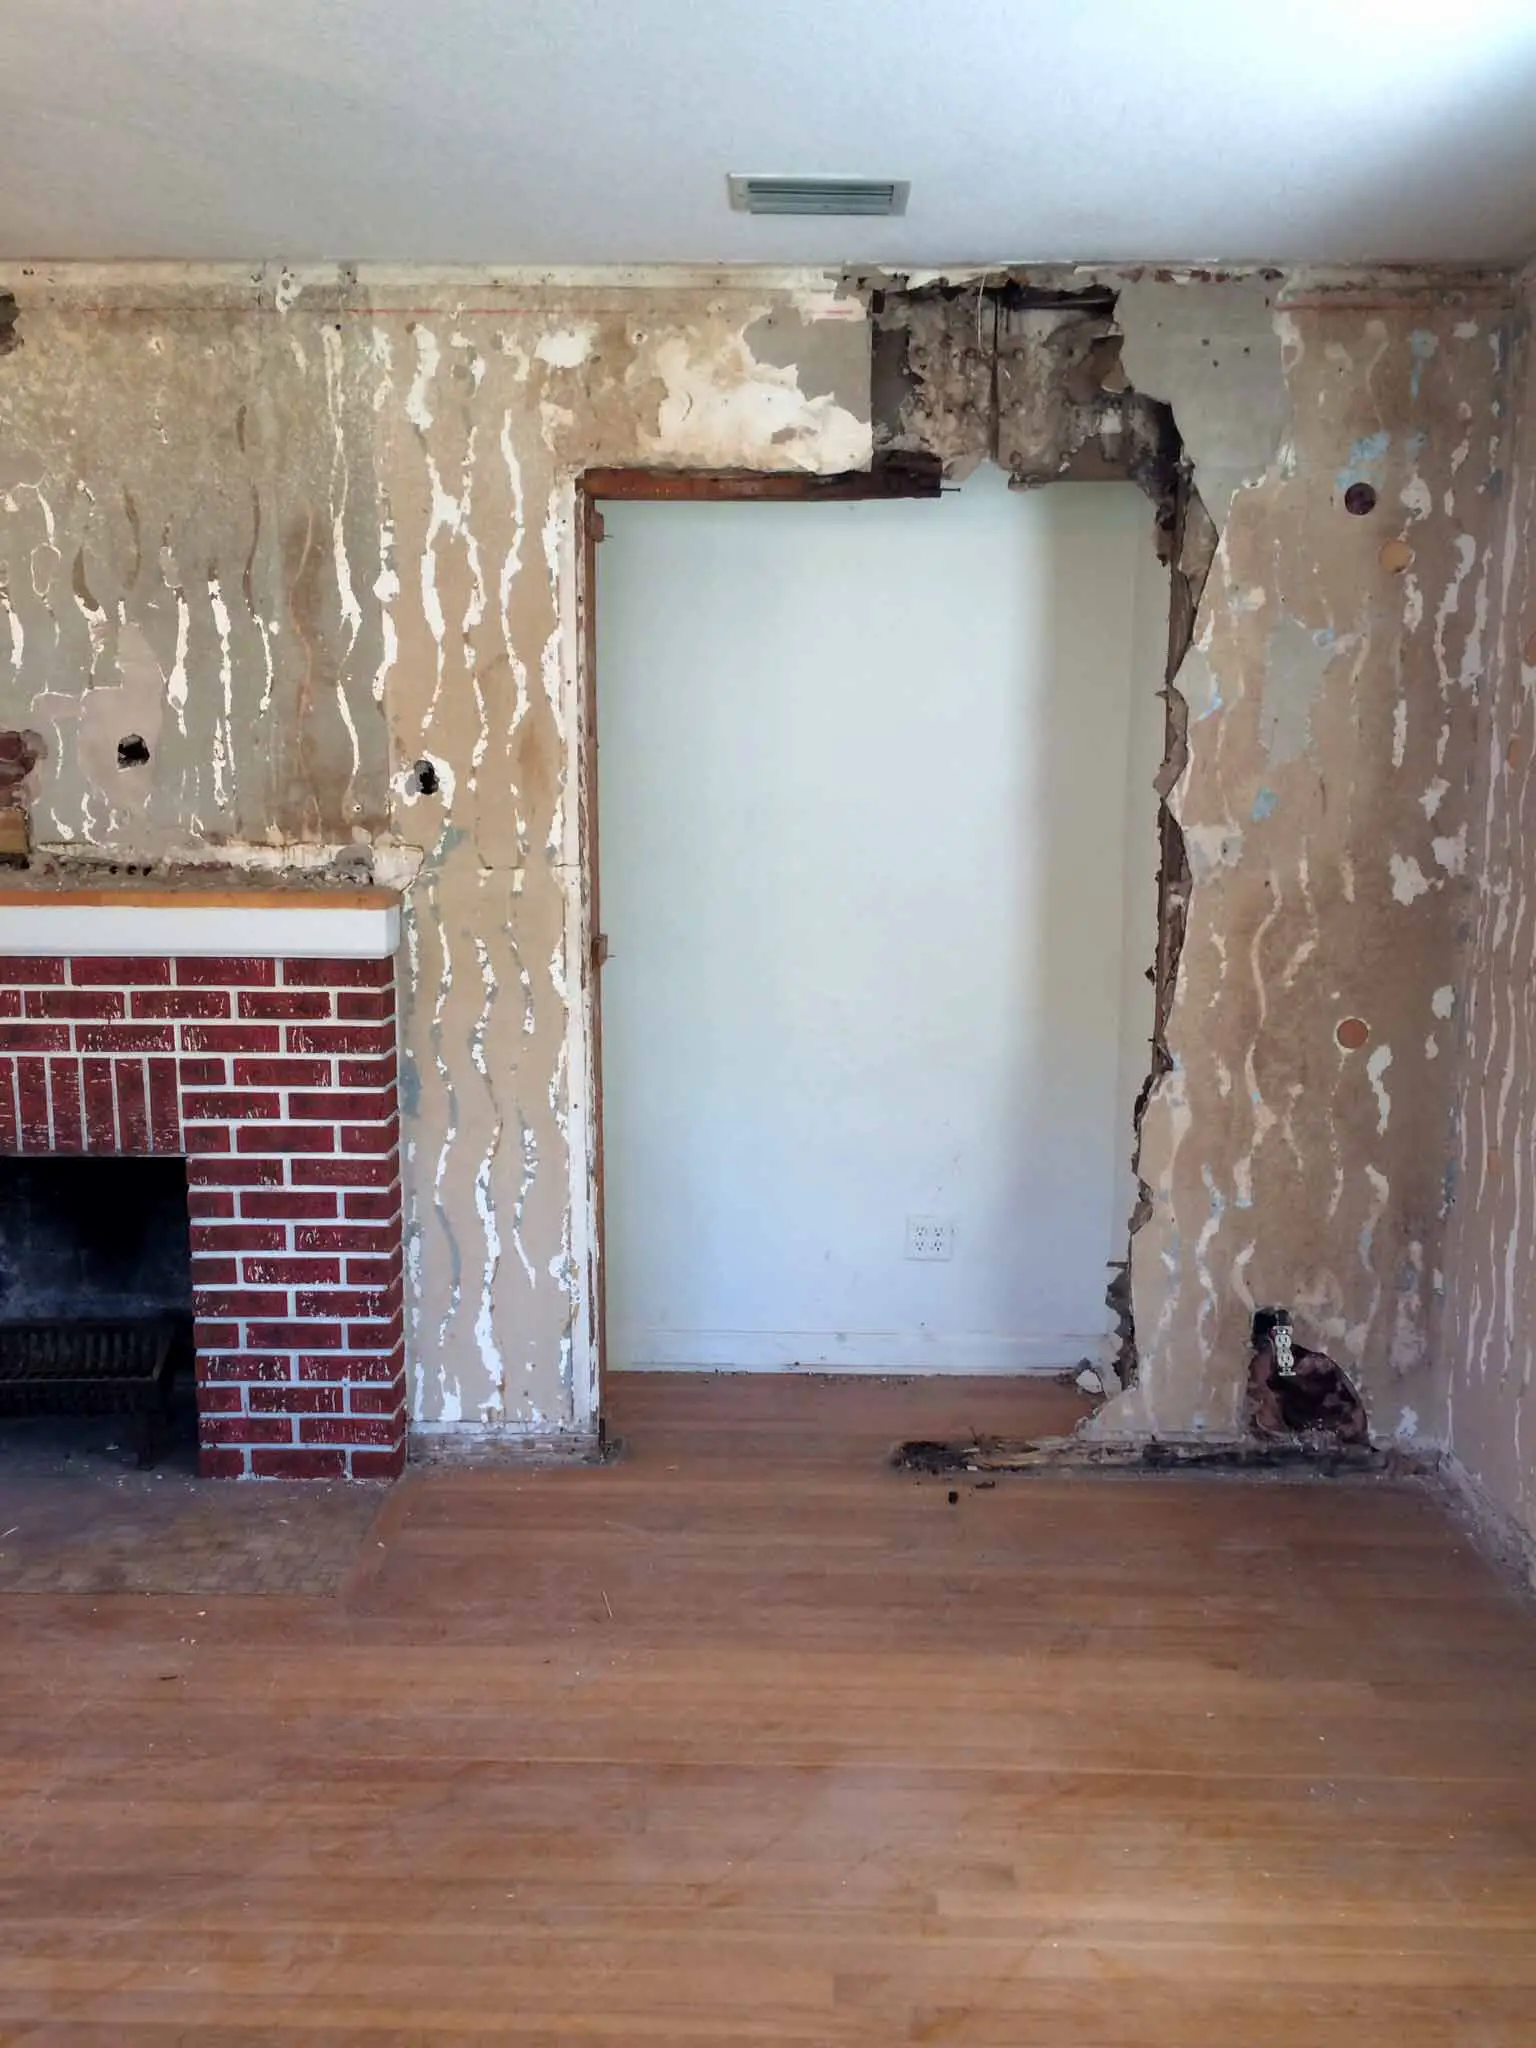 Rotten Framing - Home Renovation In Progress - That Homebird Life